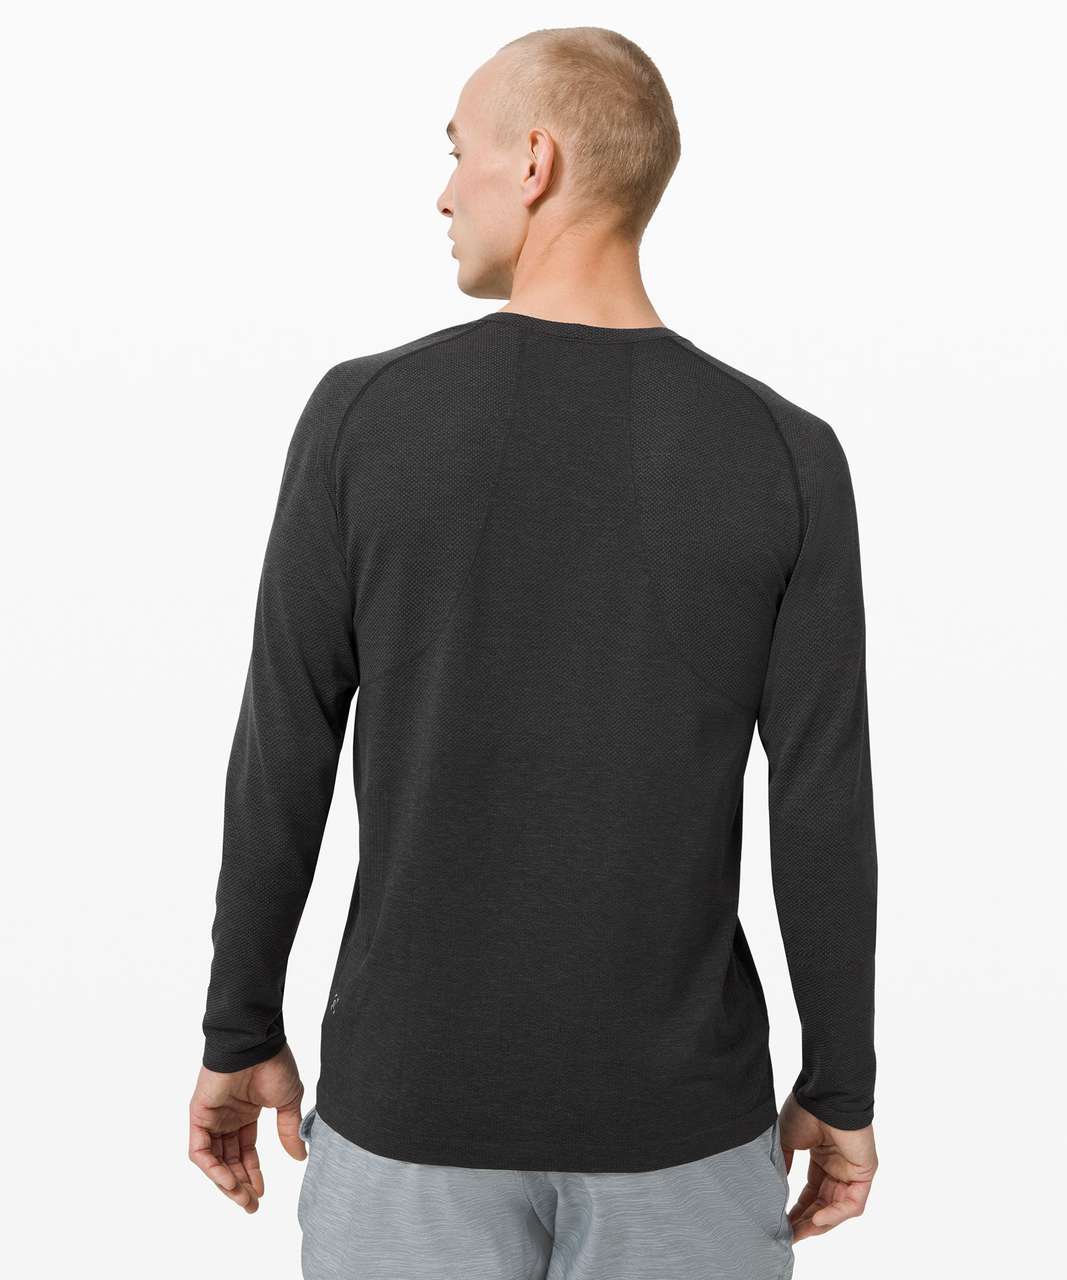 Lululemon Metal Vent Tech Long Sleeve Shirt 2.0 - Deep Coal / Black